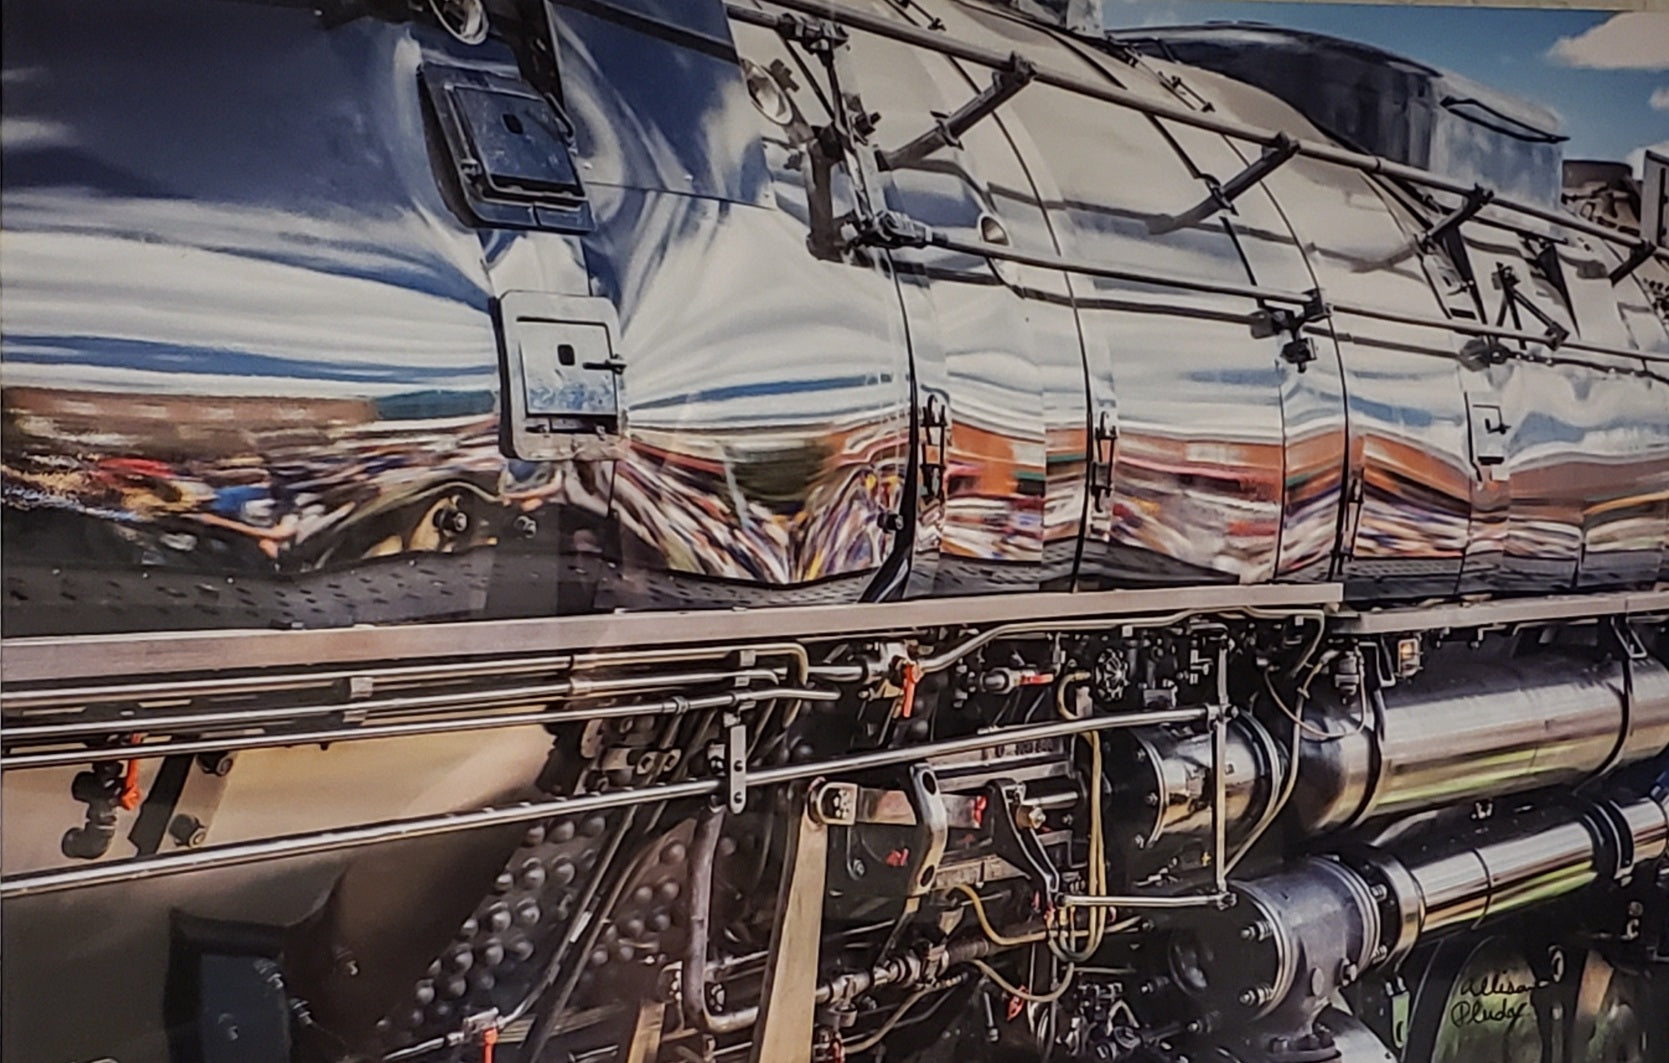 Big Boy 4014 Steam Engine  Photographer: Allison Pluda  12" x 18" Metal print  Big Boy 4014 Historic Steam Locomotive  Downtown Laramie Reflected in the Engine